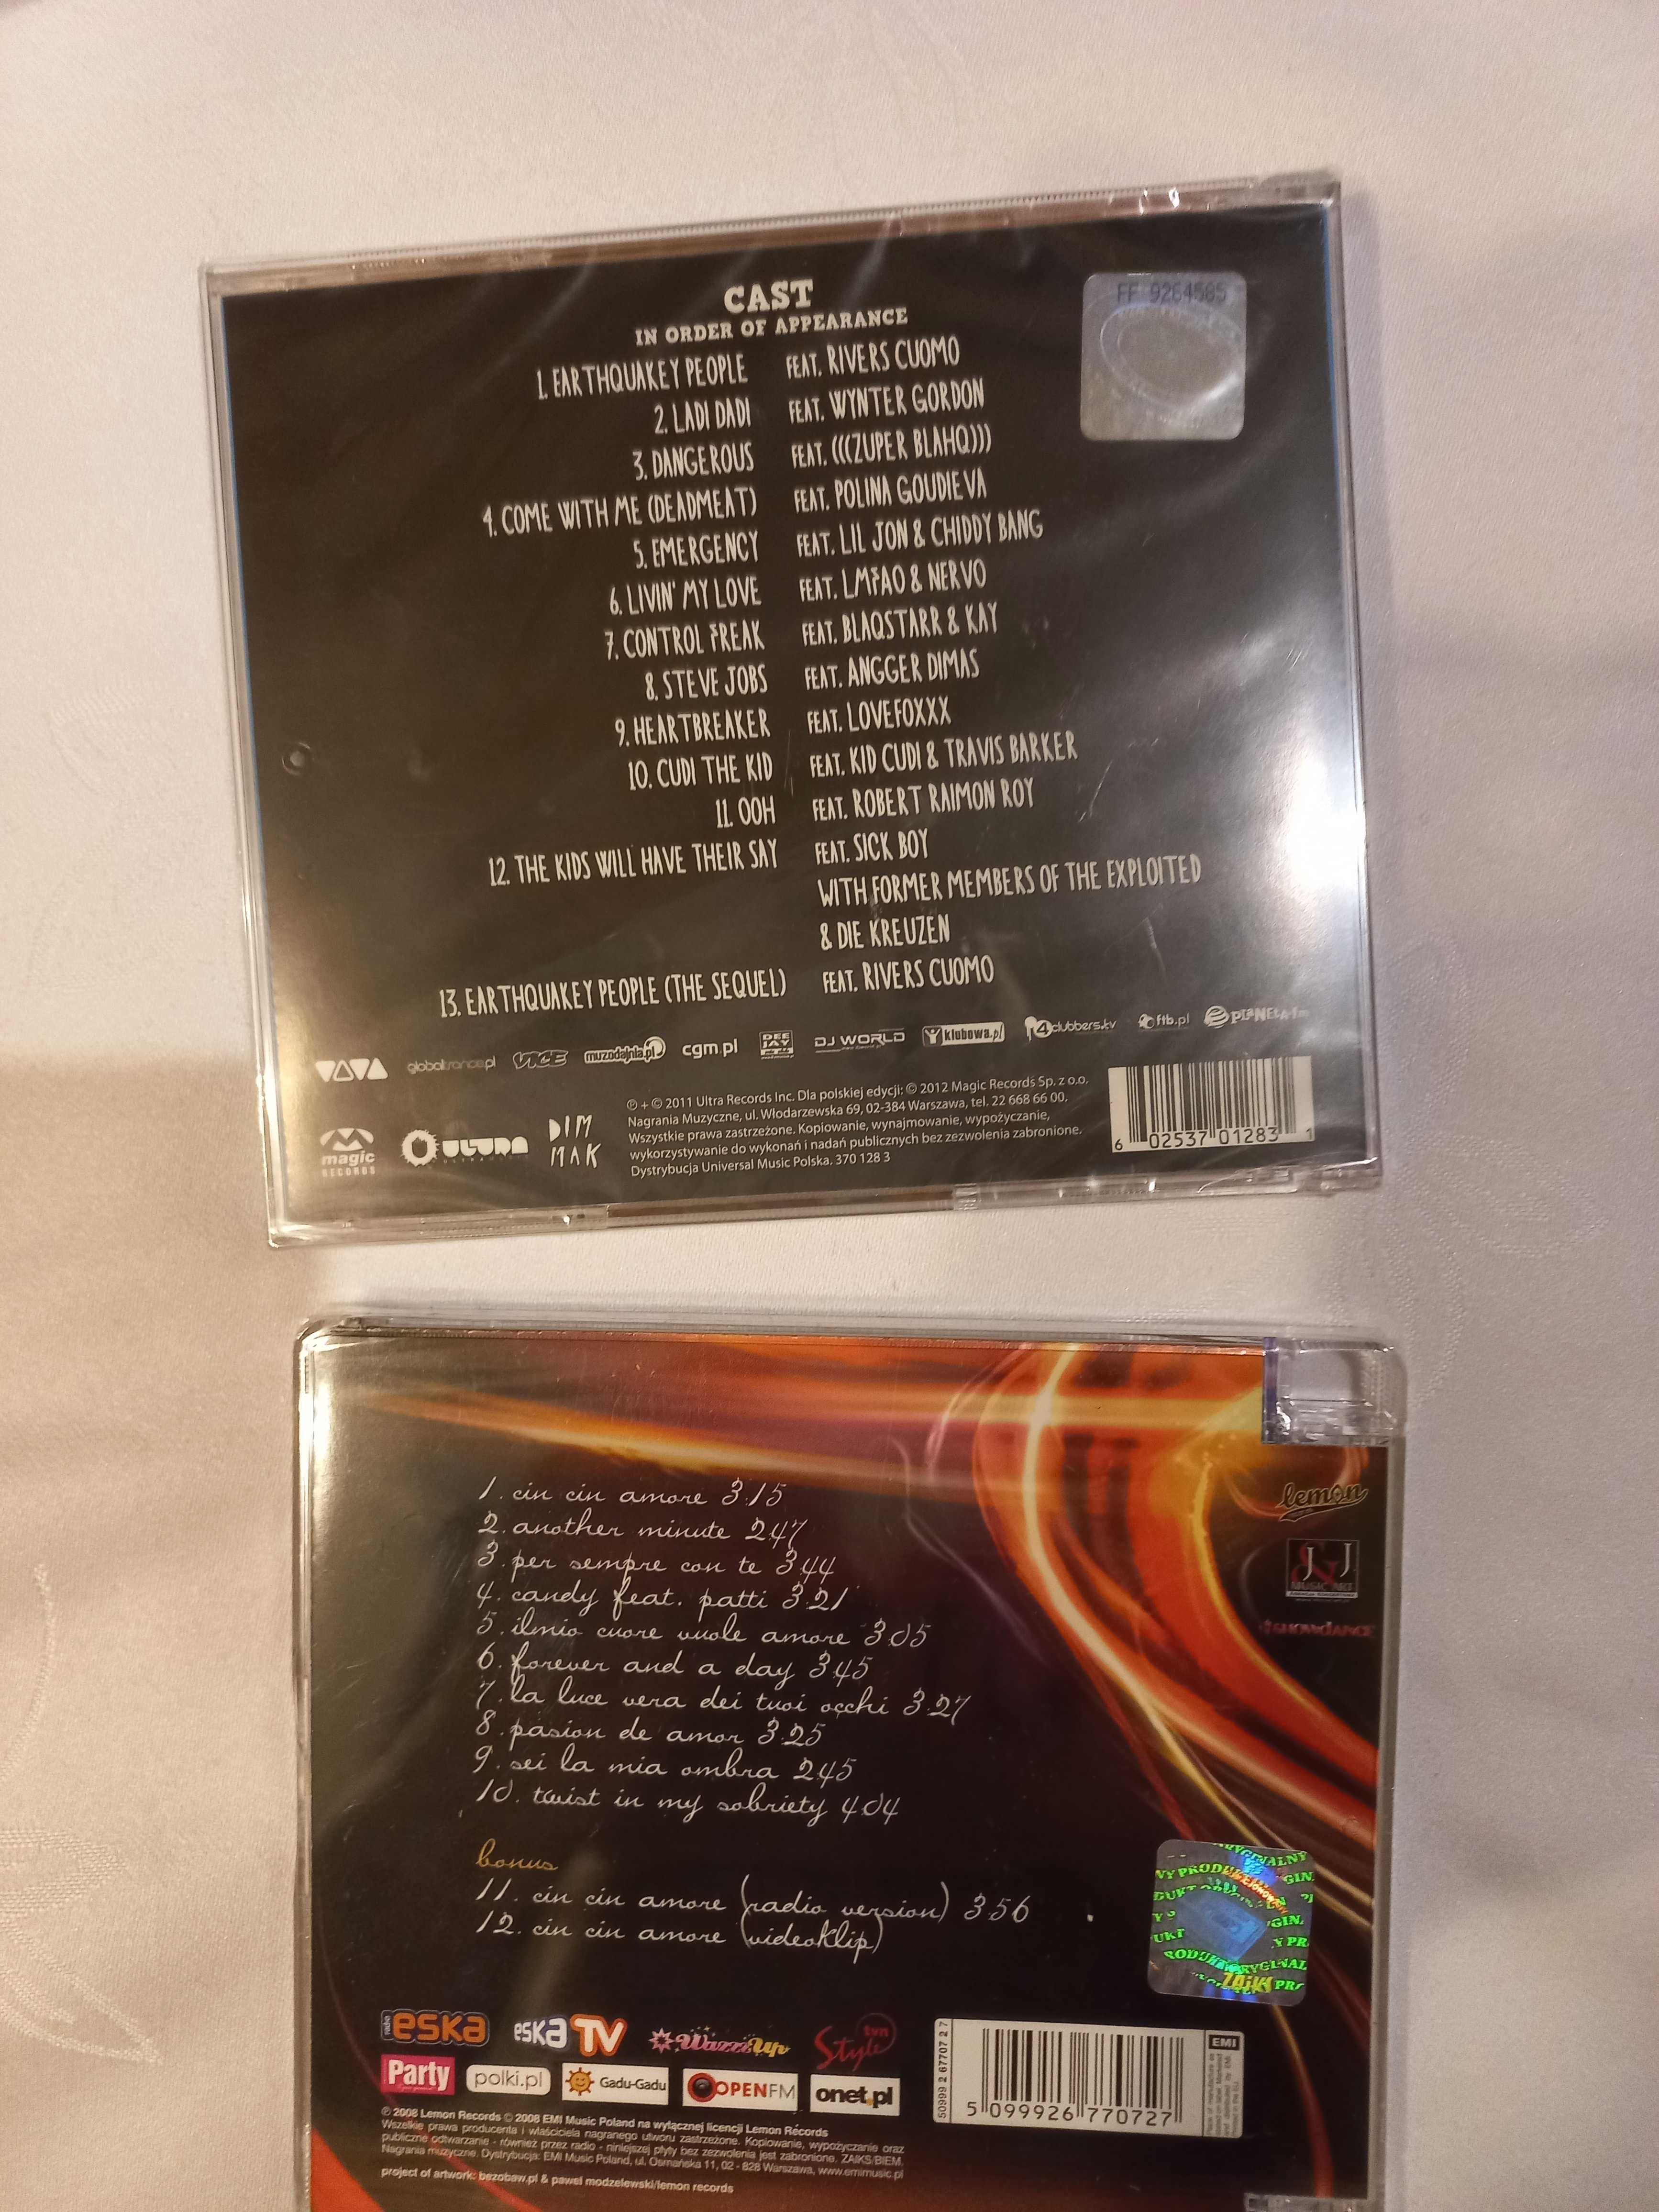 CD - Steve Aoki, Stefano Terrazzino, The Feeling - cena za zestaw